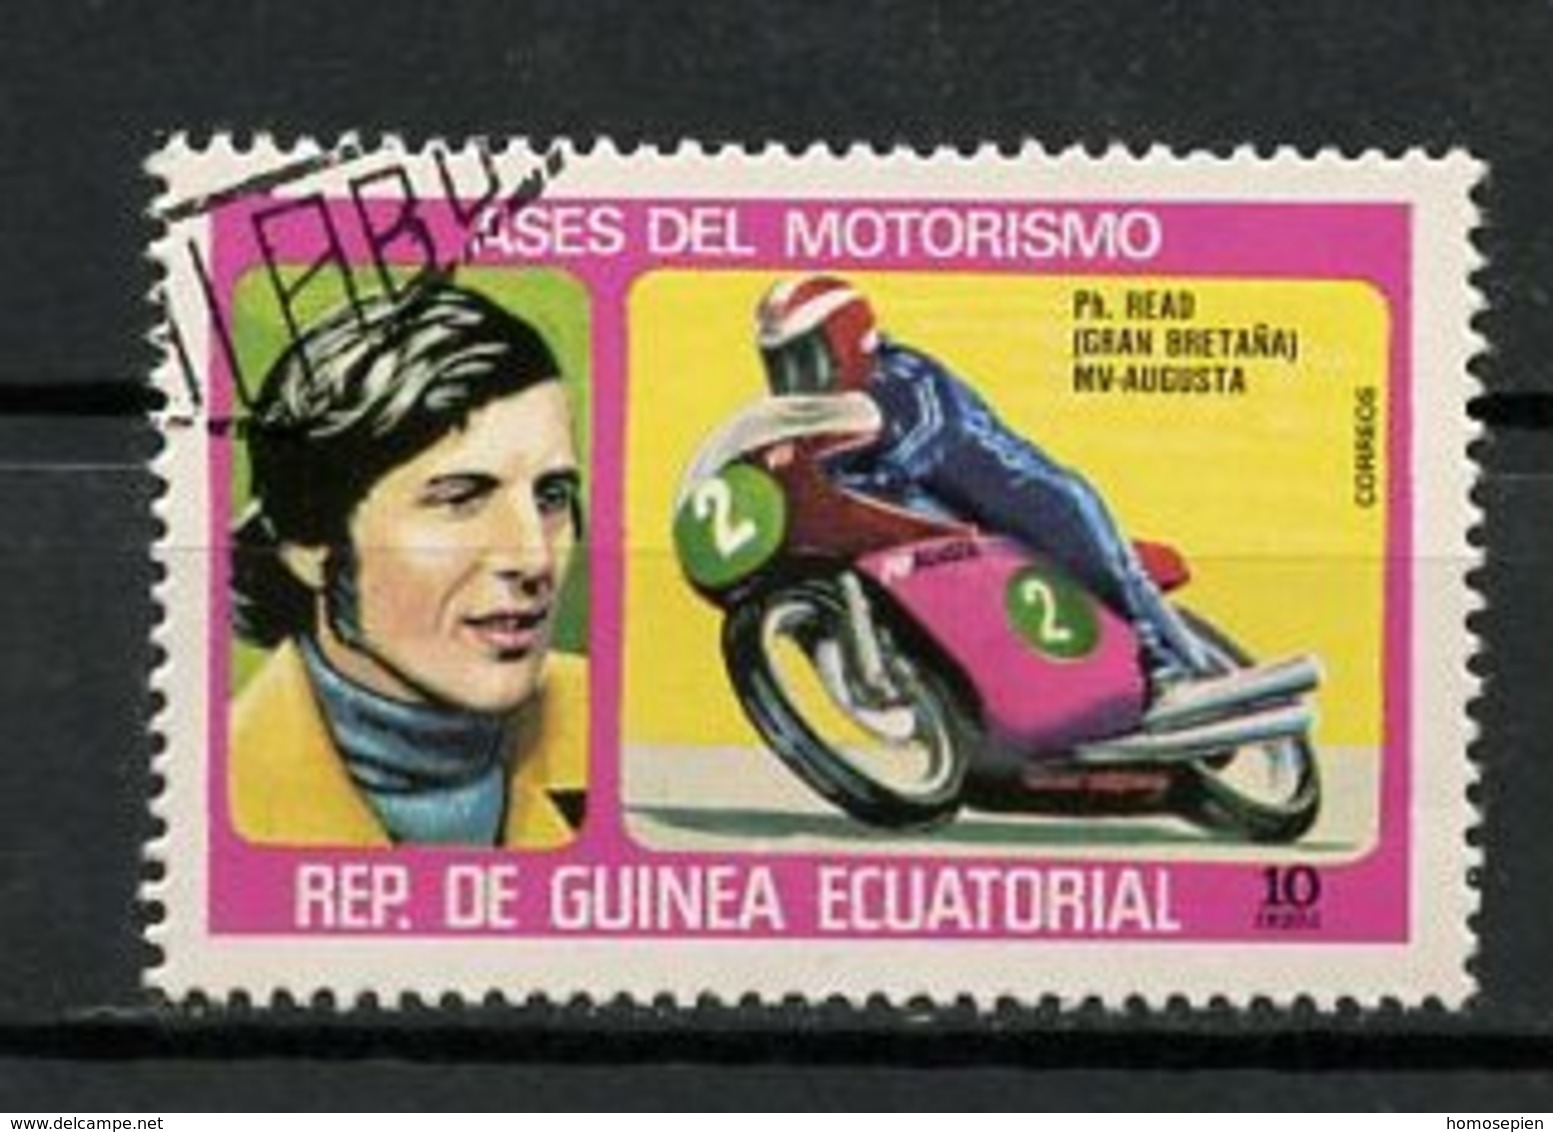 Guinée équatoriale - Guinea 1976 Y&T N°88-10e - Michel N°900 (o) - 10e Moto P Read MV Augusta - Guinée Equatoriale